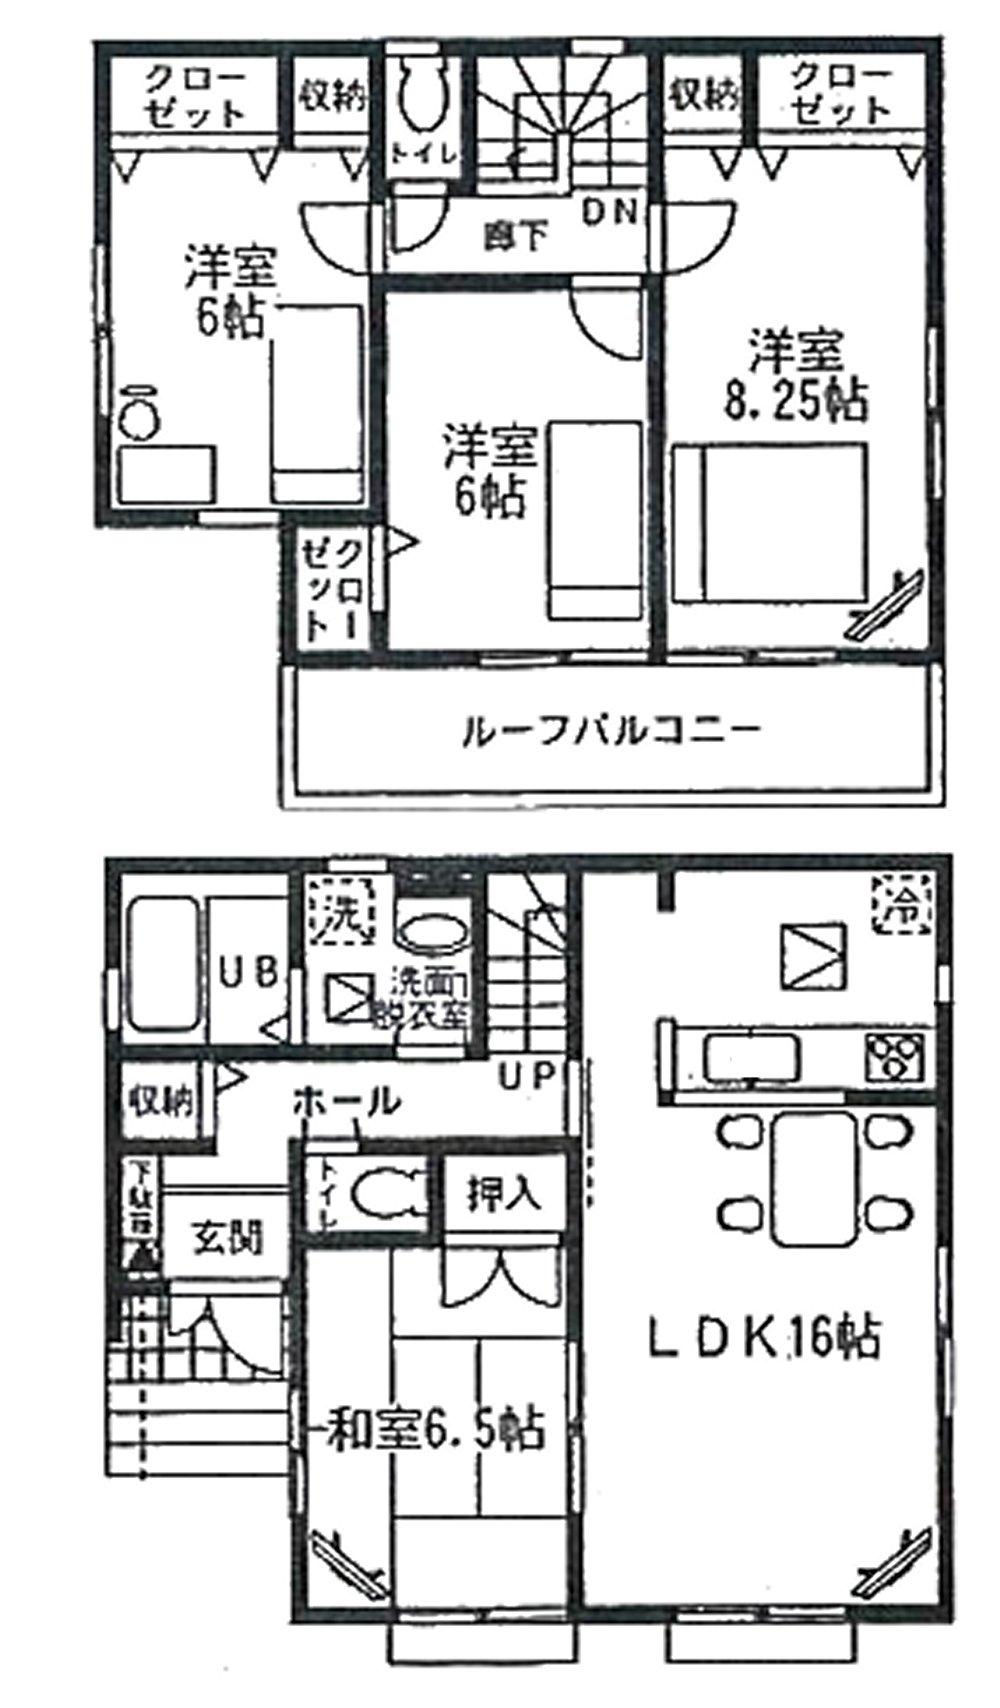 Floor plan. (1 Building), Price 19.9 million yen, 4LDK, Land area 150.04 sq m , Building area 99.36 sq m